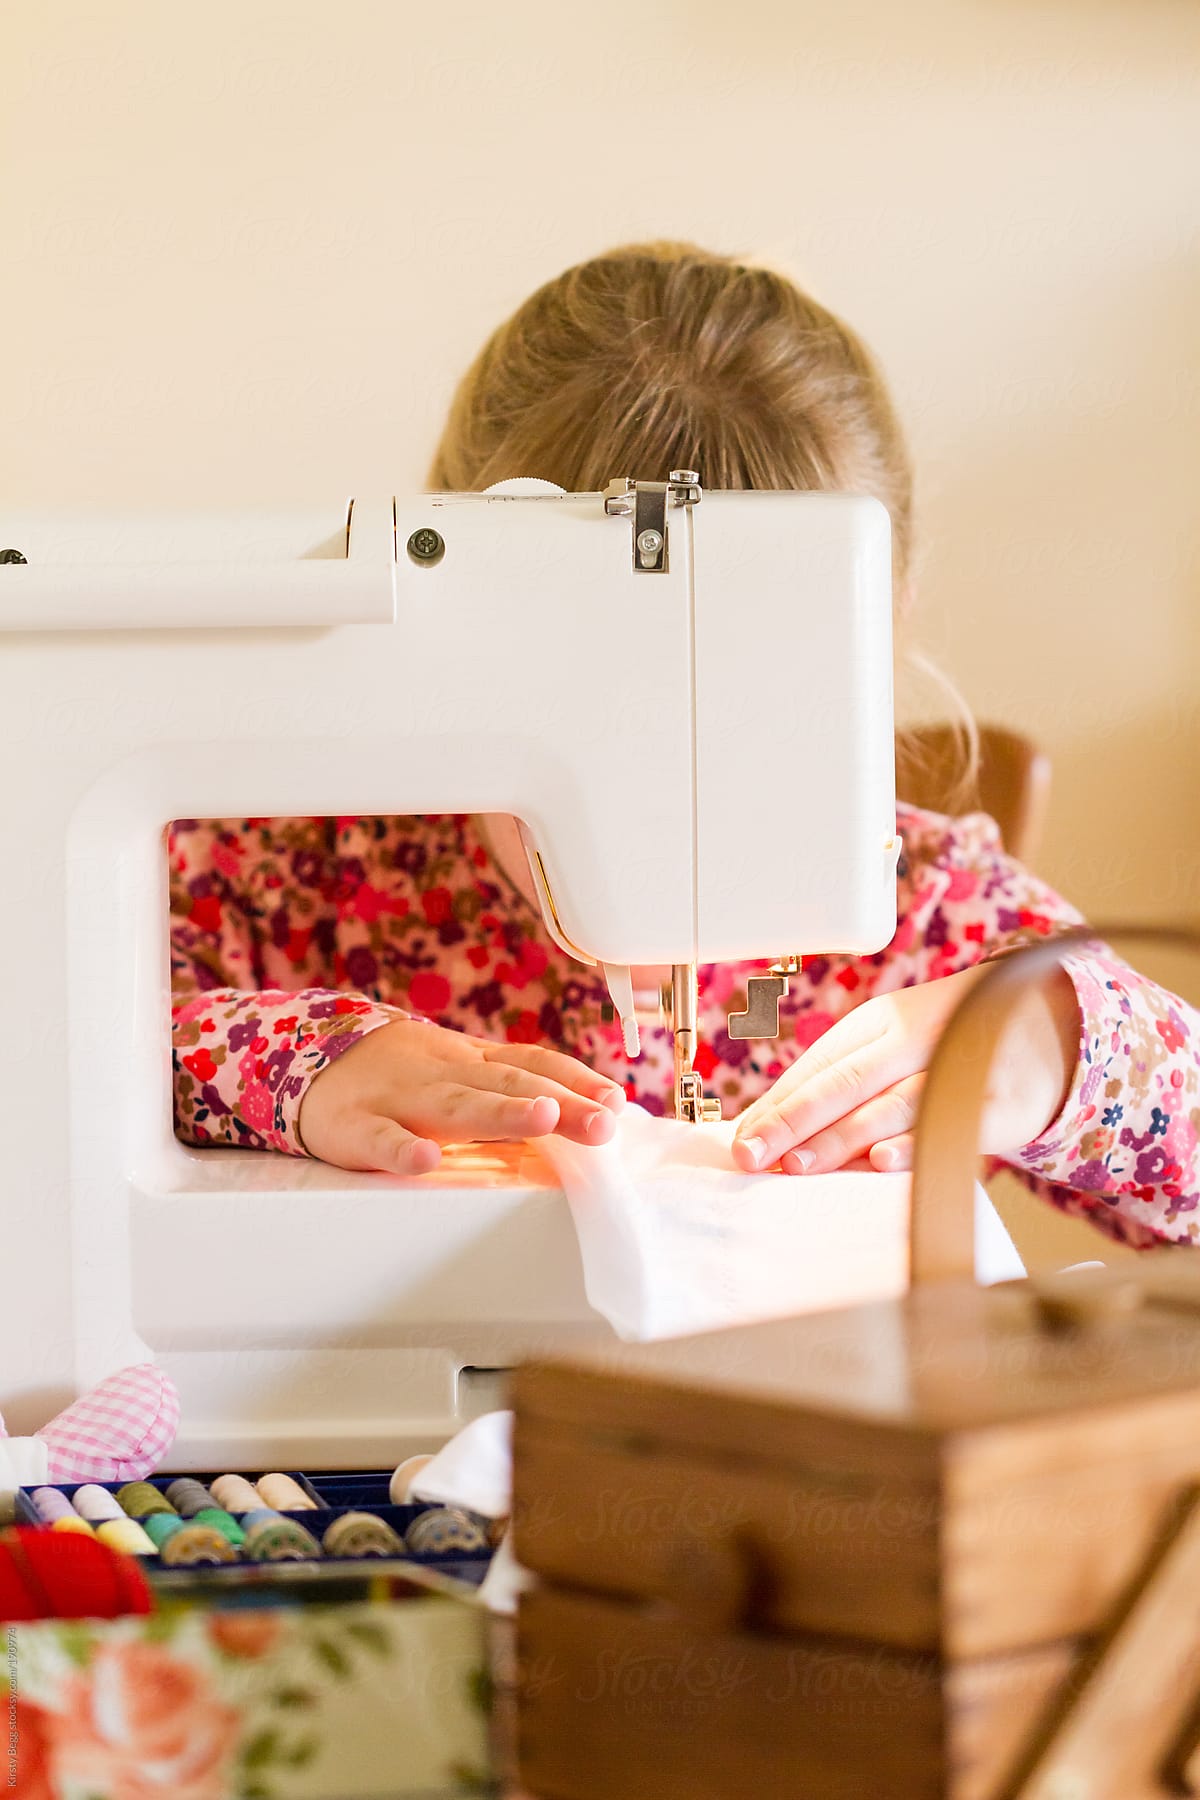 Girl sewing on machine